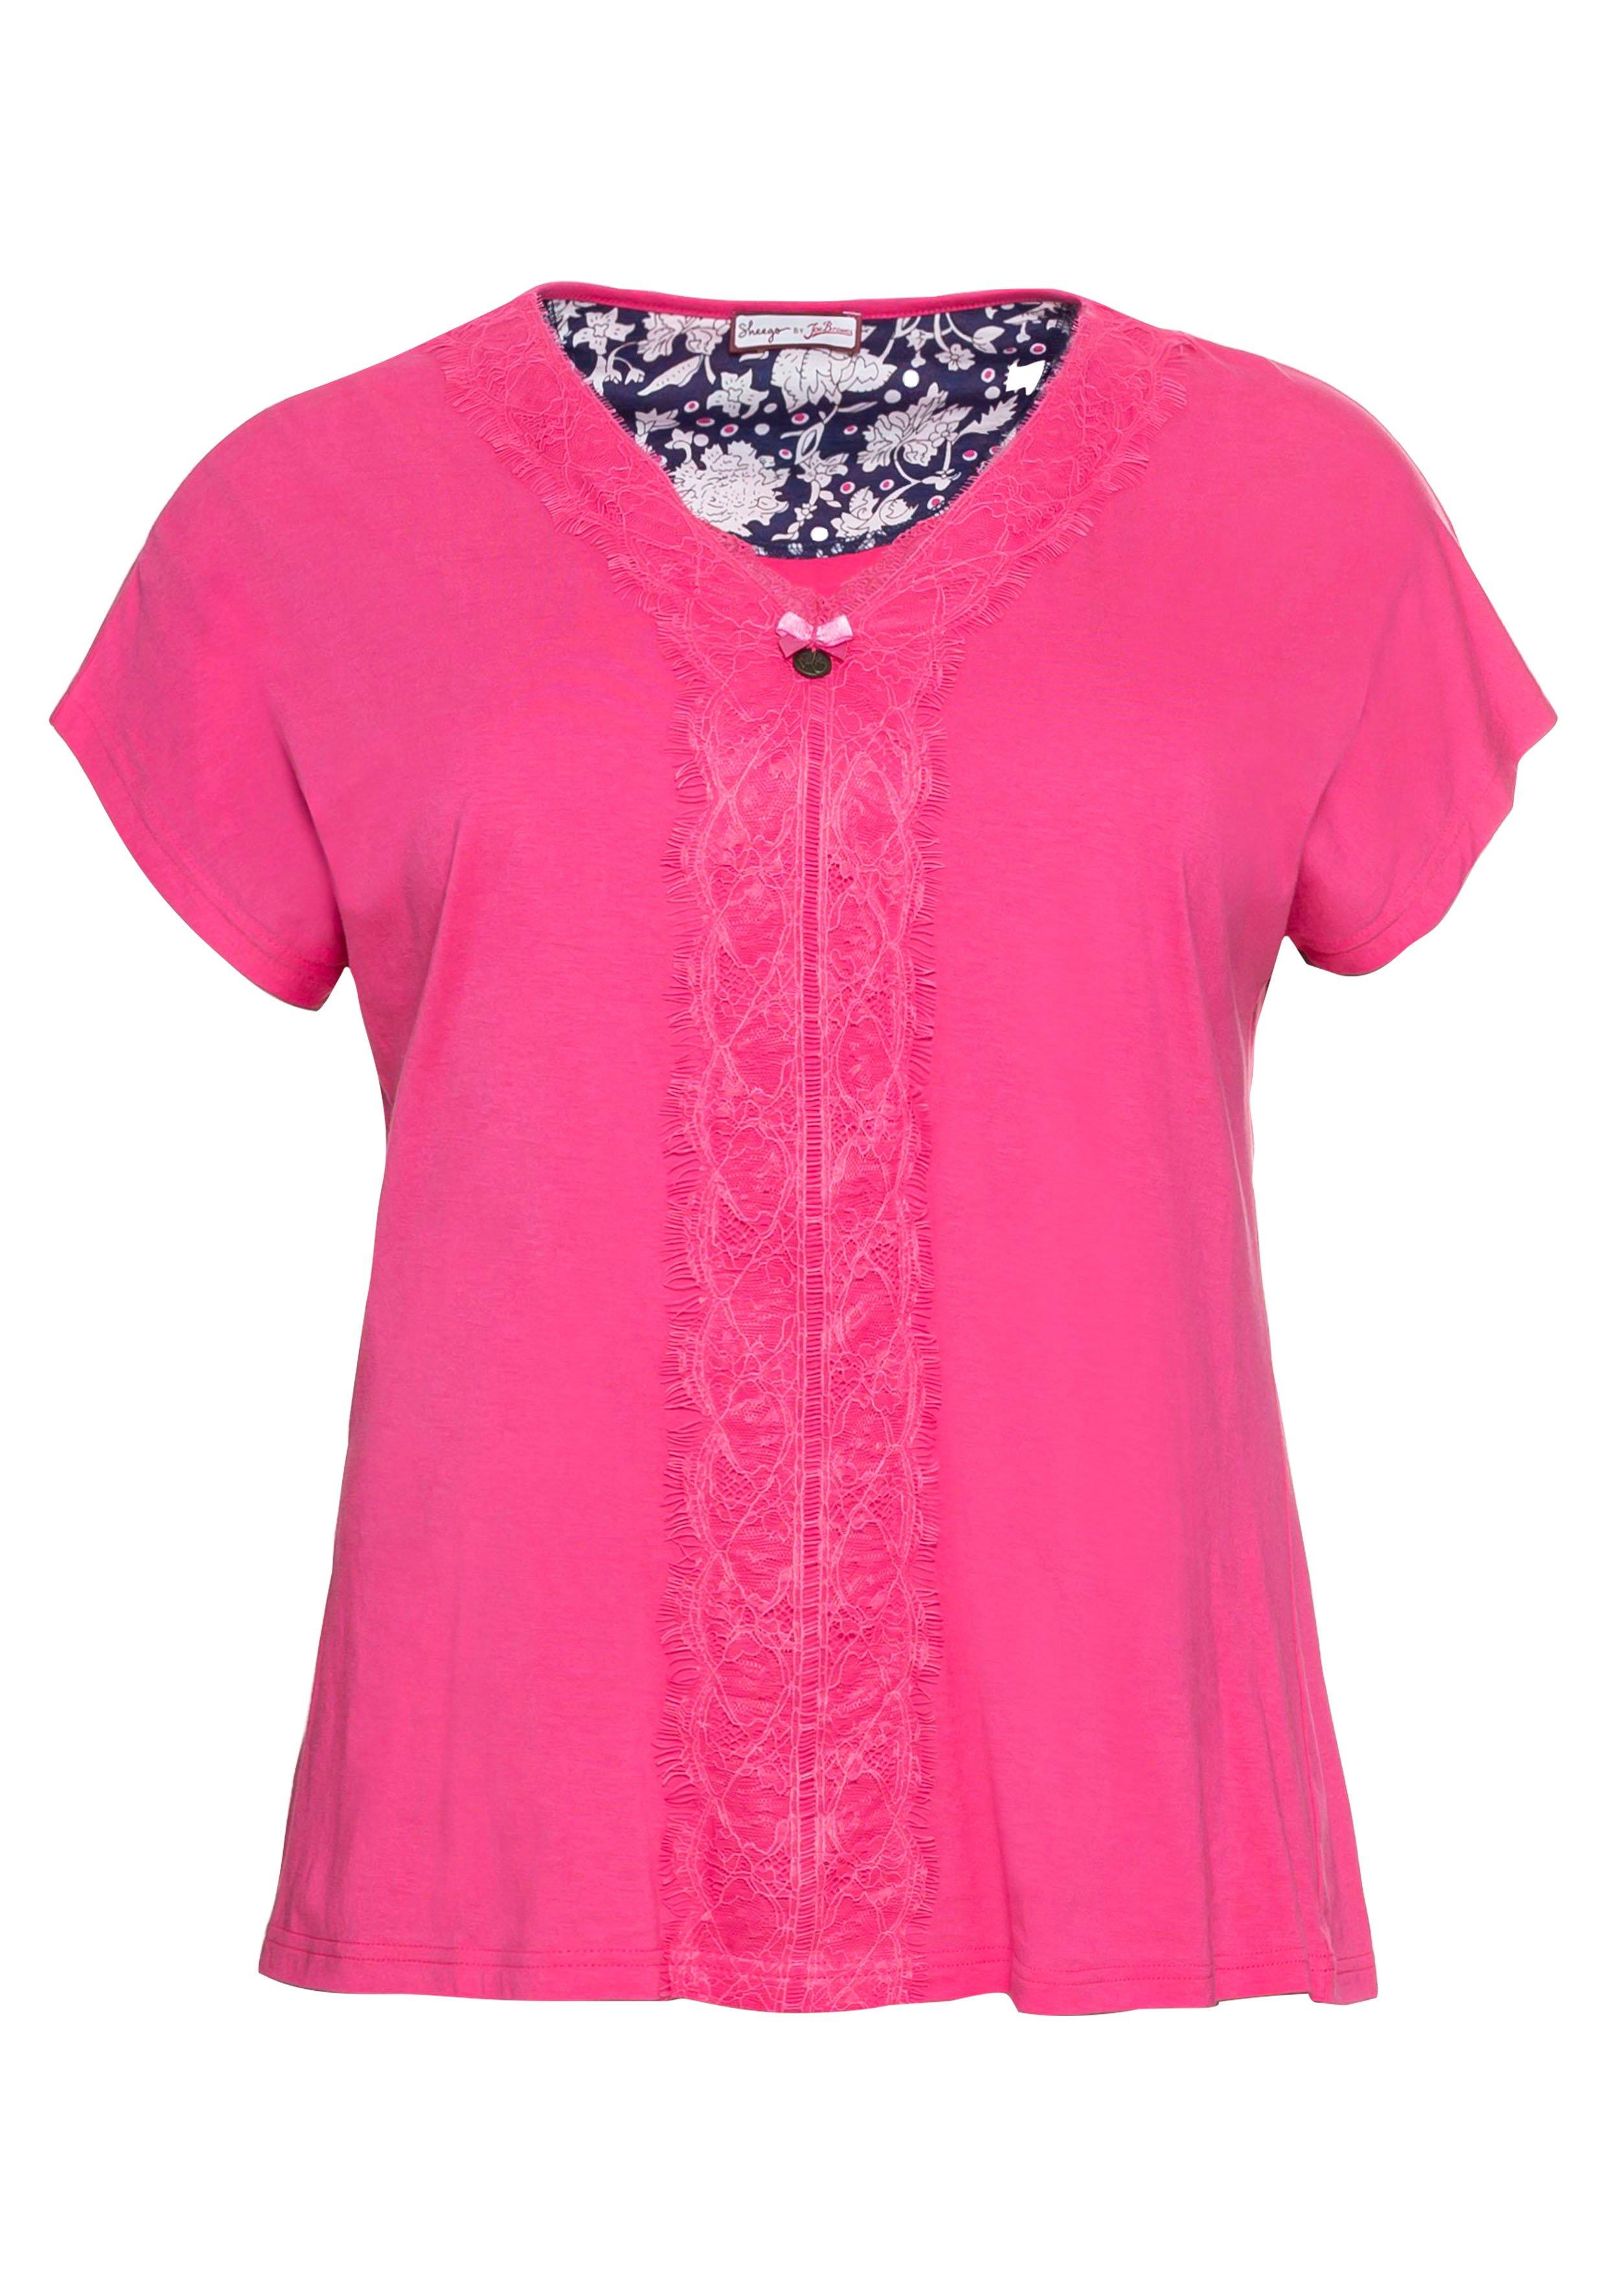 Lounge-Shirt in Oversized-Form mit sheego Details pink - femininen 